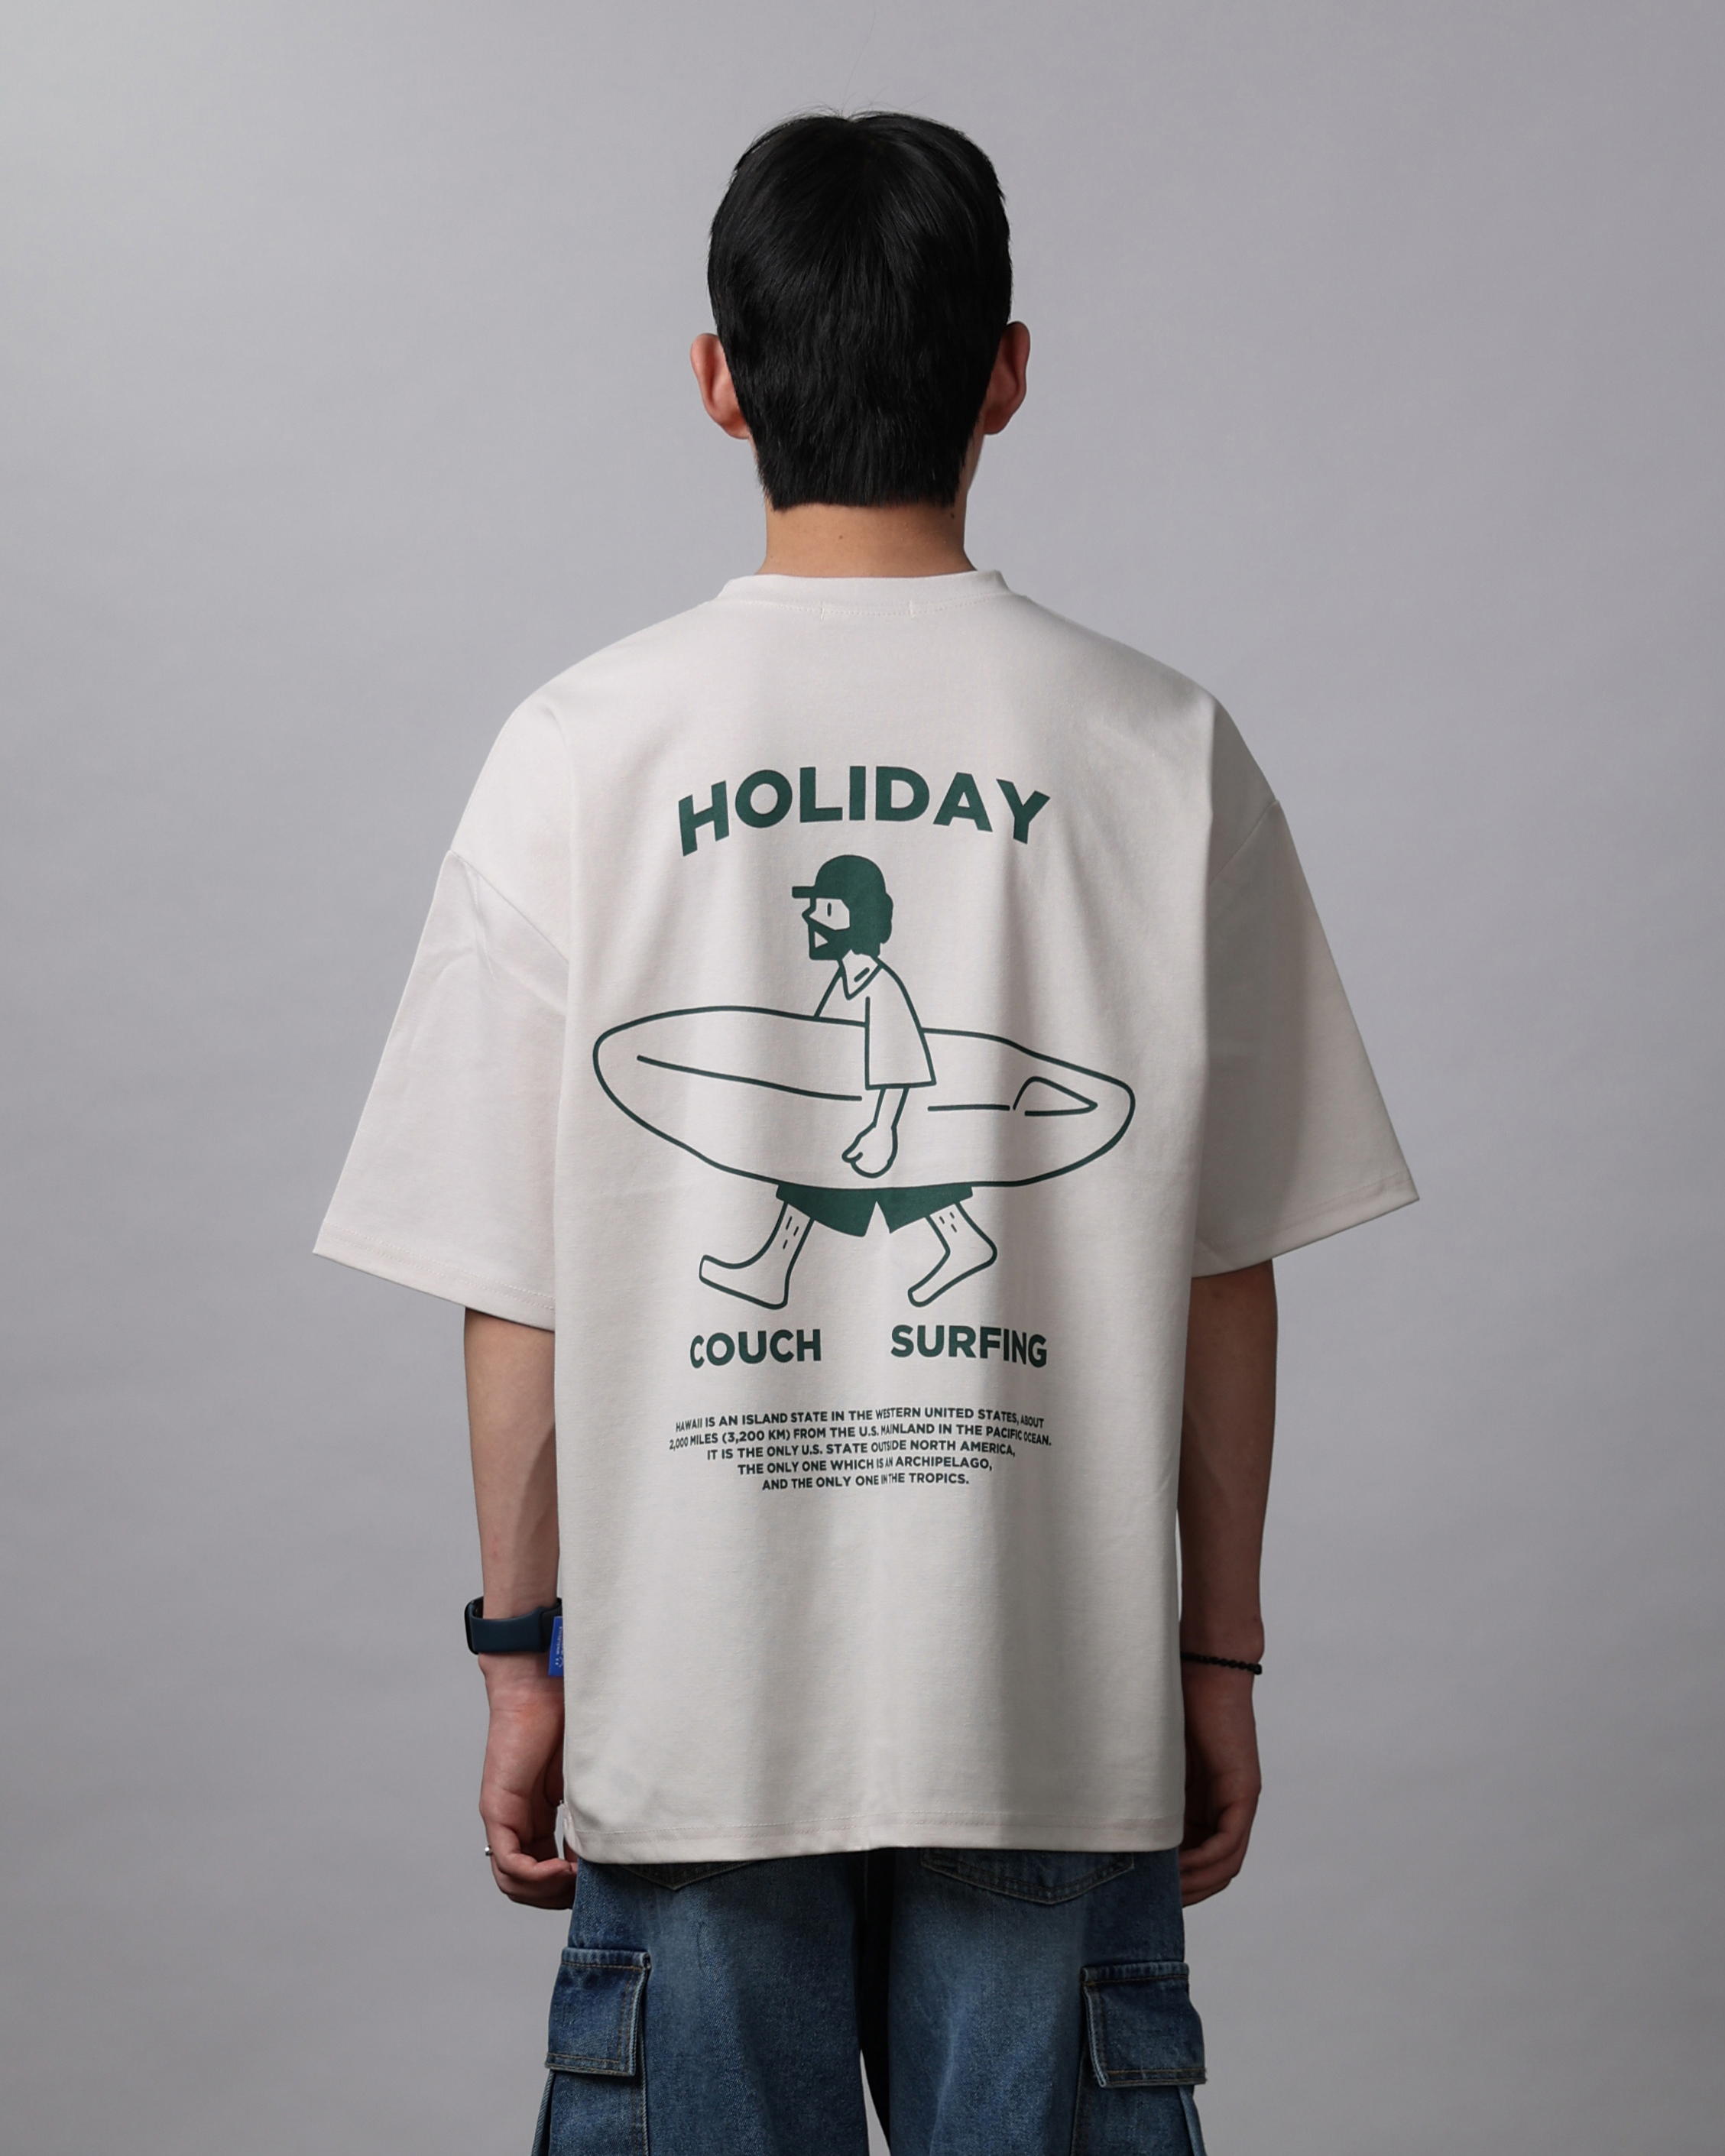 ANOTHR HOLIDAY SURF Summer T Shirts (Black/Cream/White) - 2차 리오더 (5/23 배송예정)